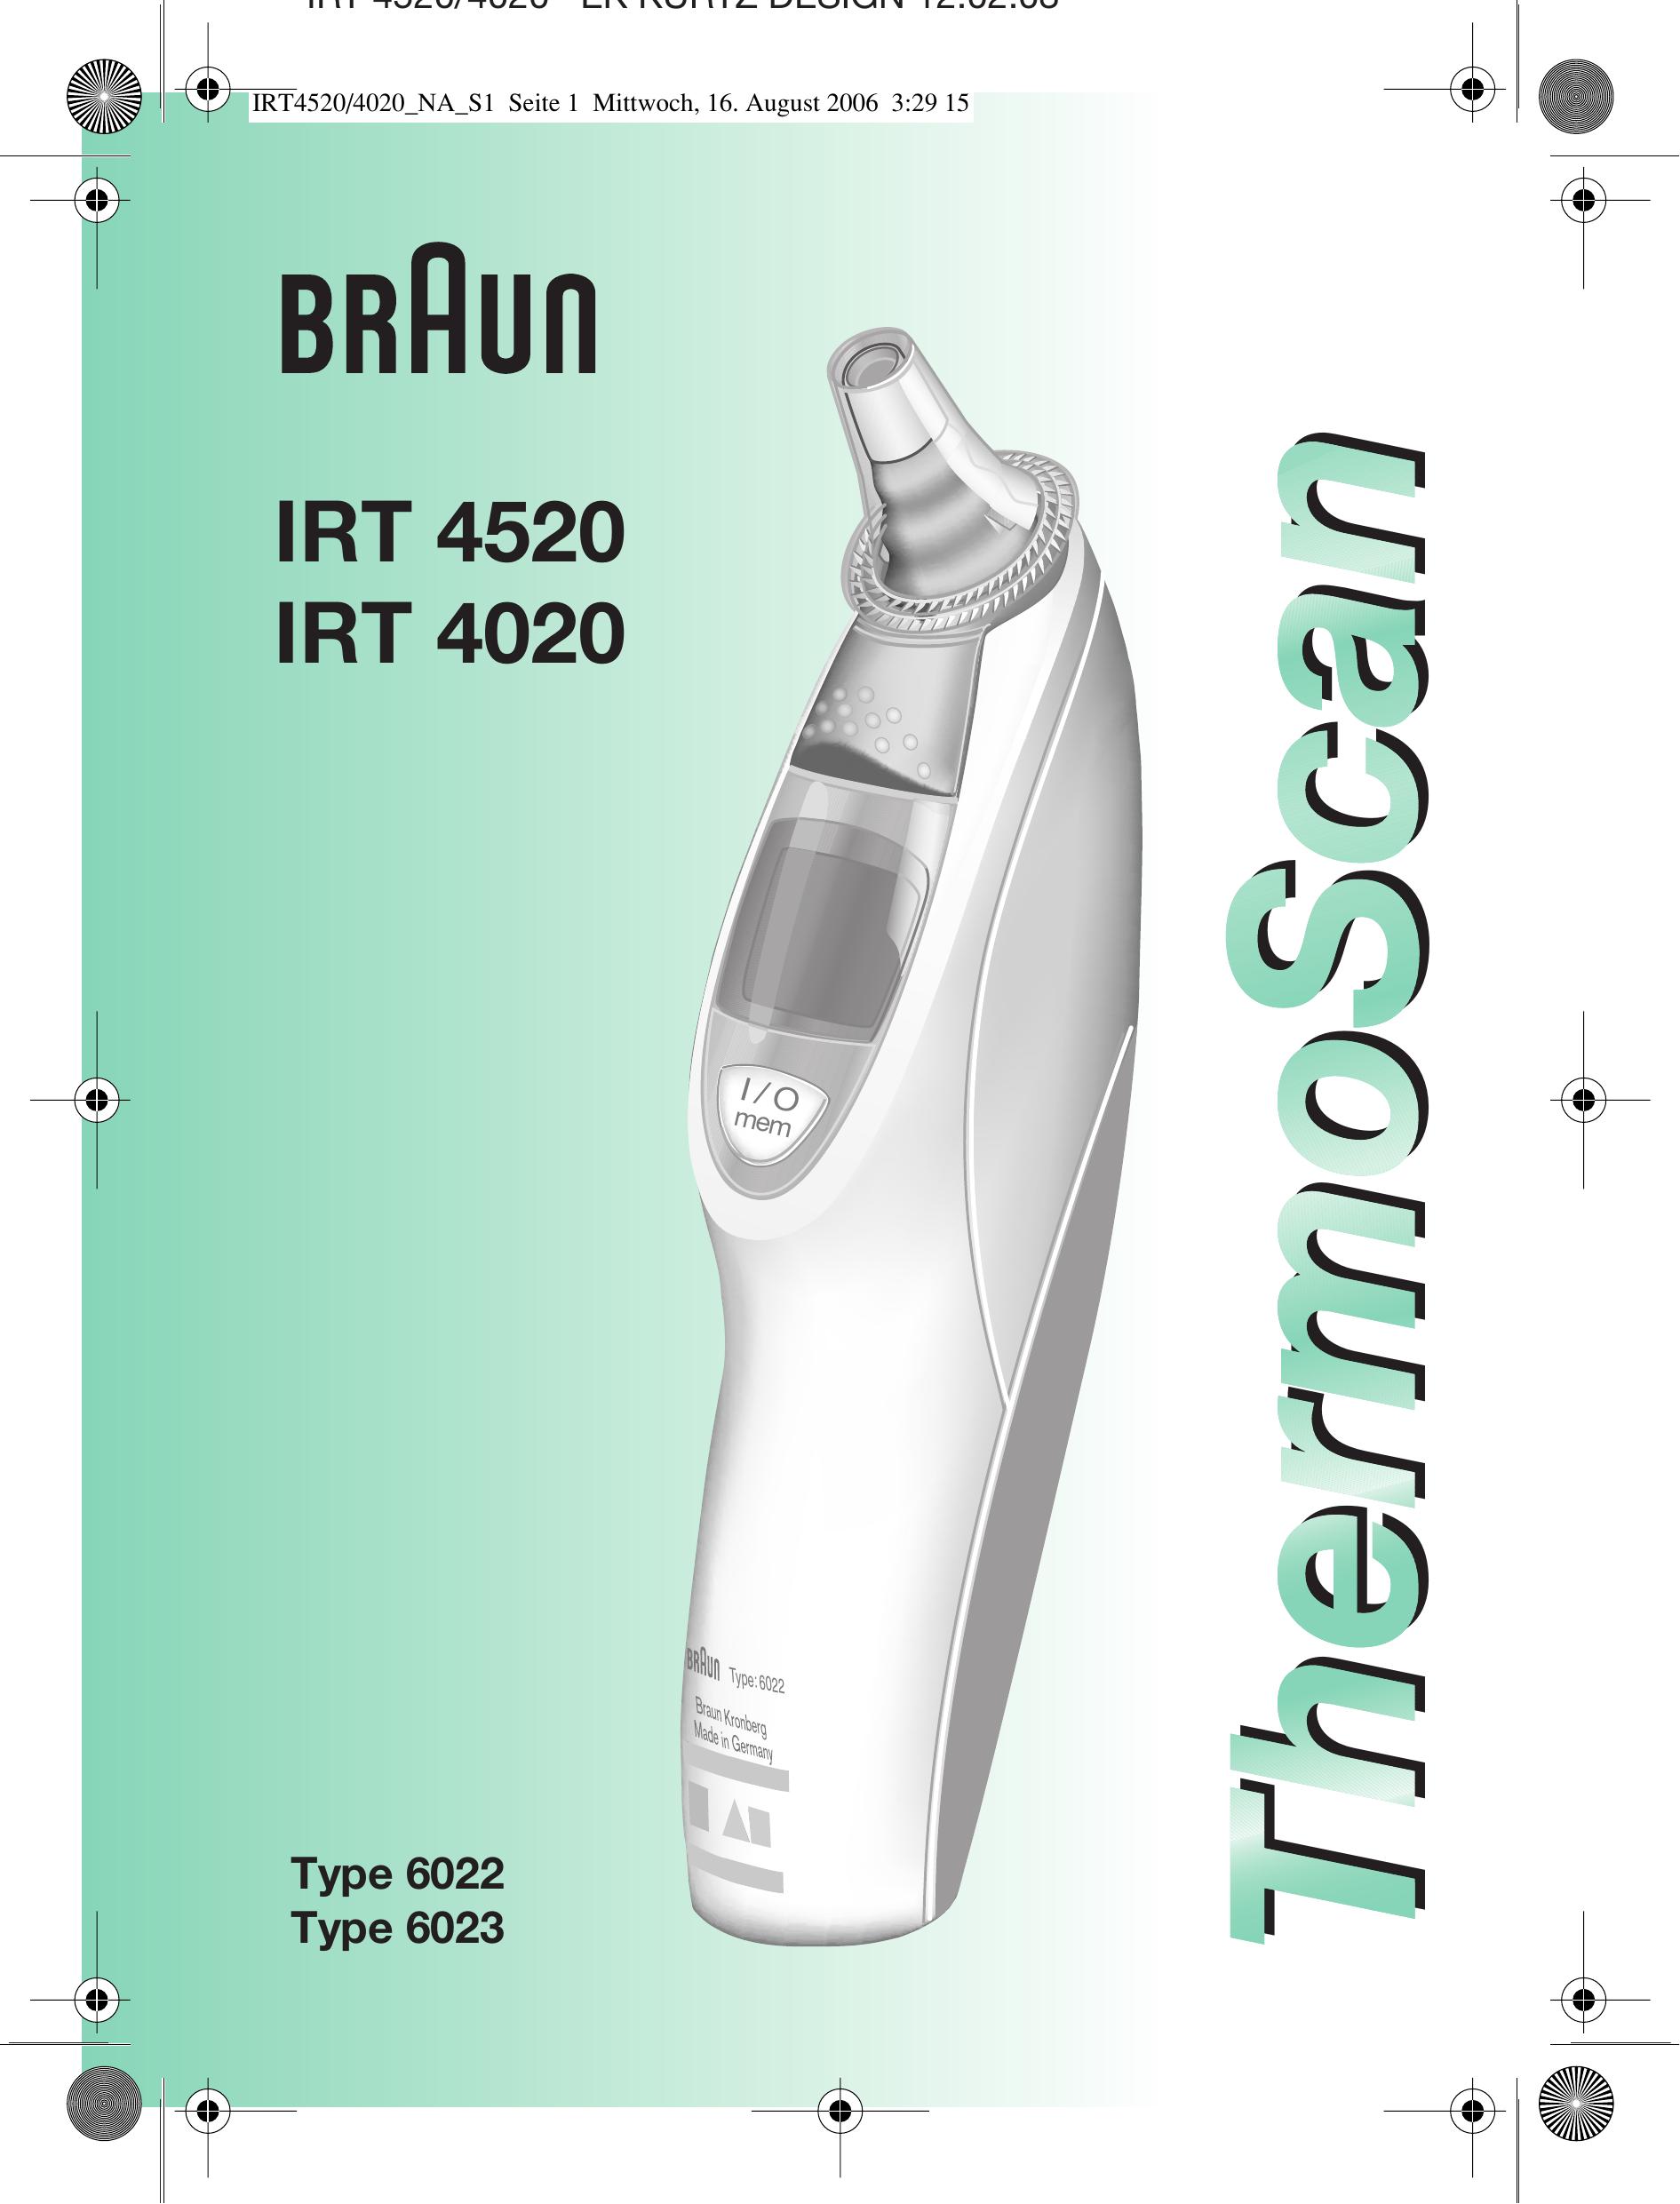 Braun IRT 4520 Thermometer User Manual